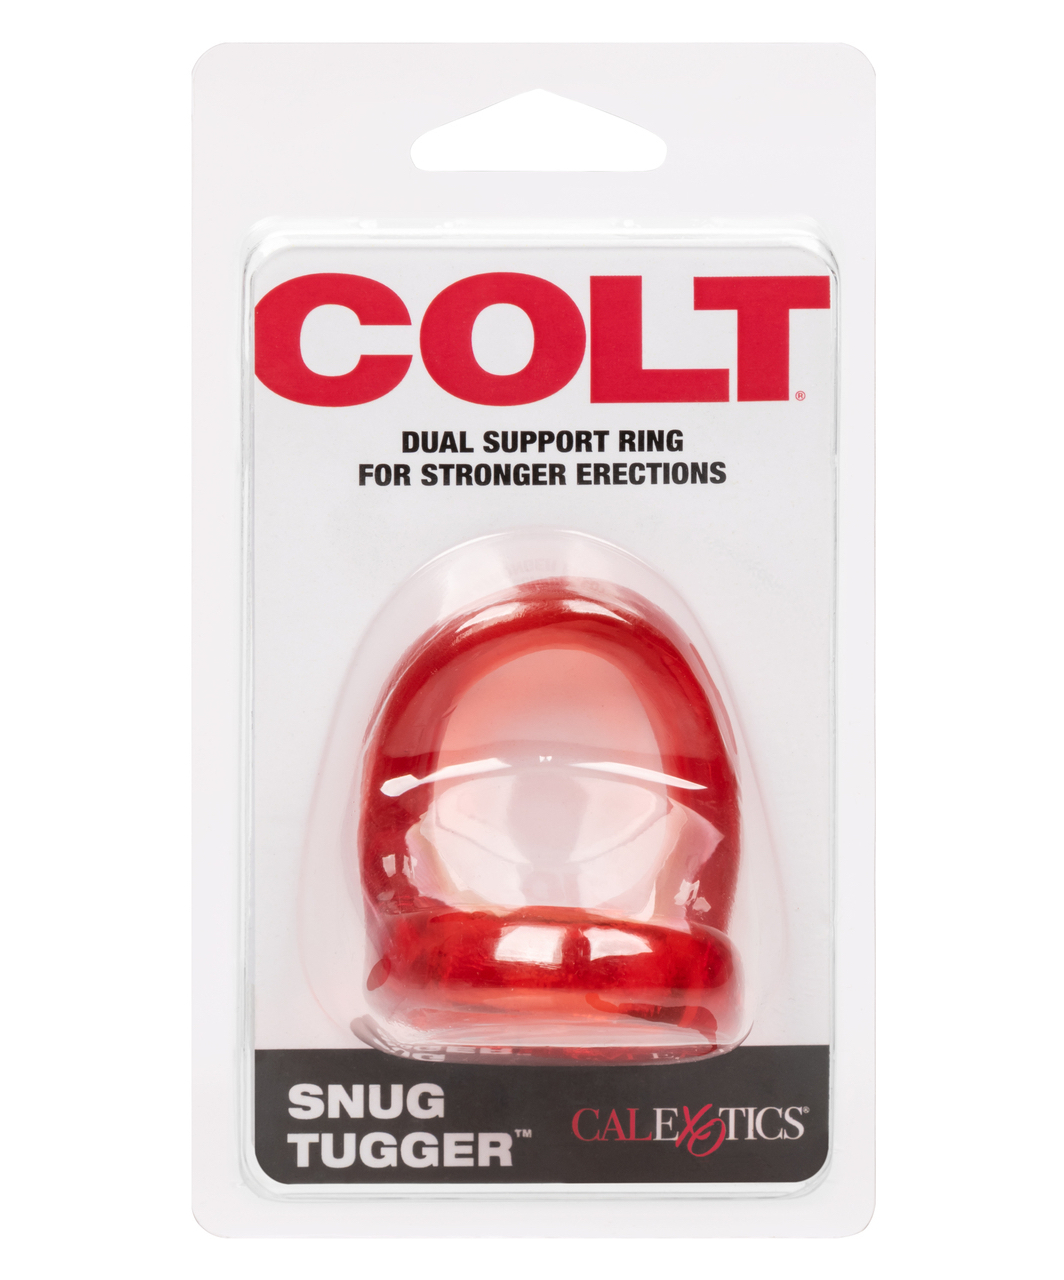 Colt Snug Tugger эрекционное кольцо